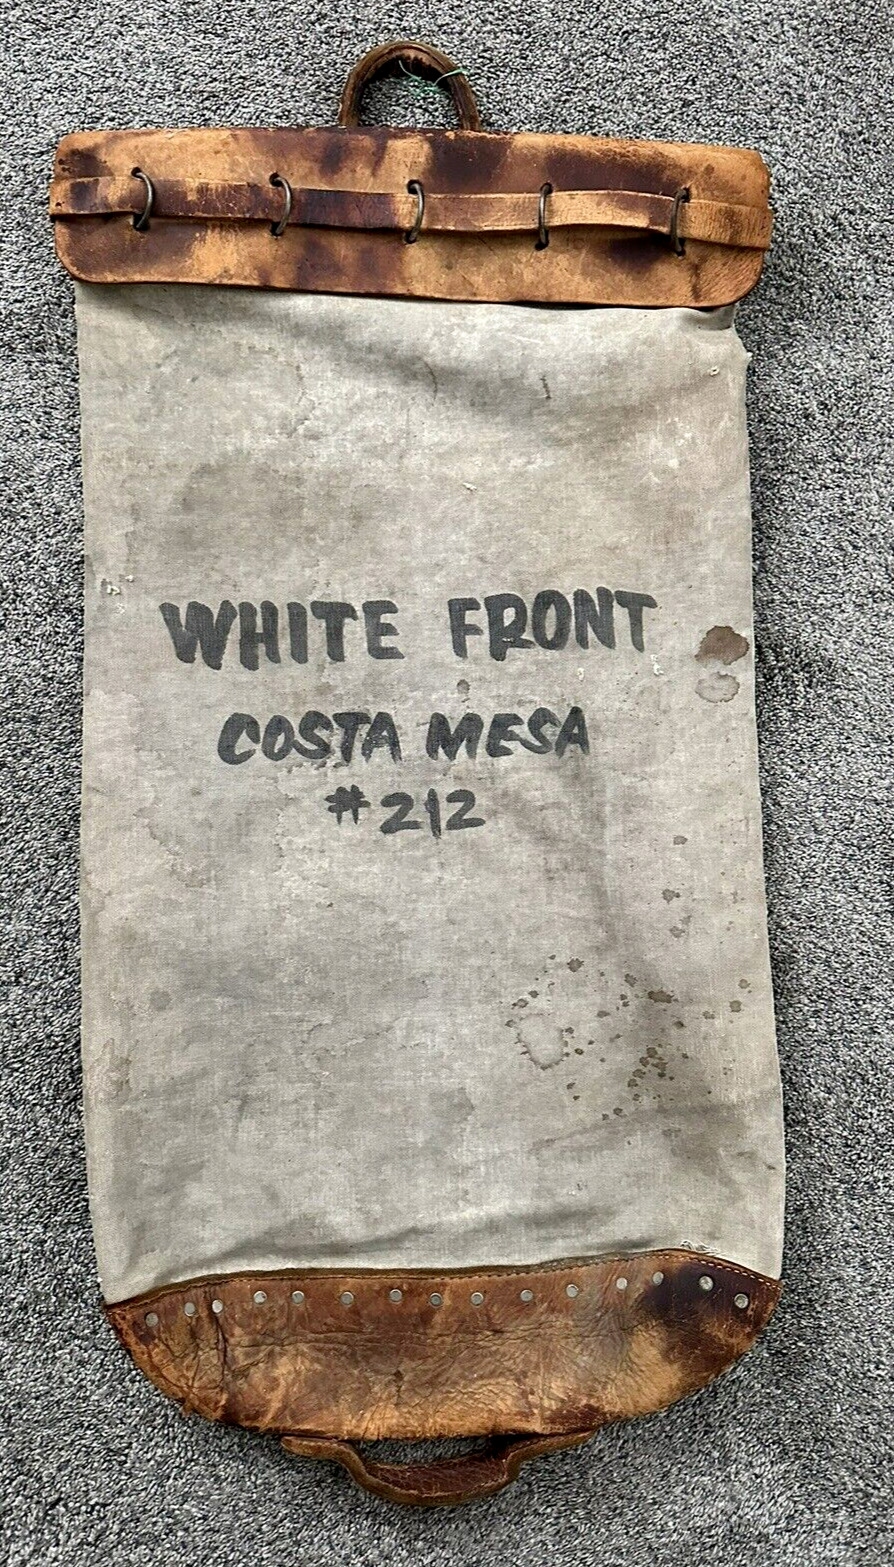 1940 Vintage Messenger LEATHER & CANVAS Bag WHITE FRONT Store COSTA MESA, CALIF